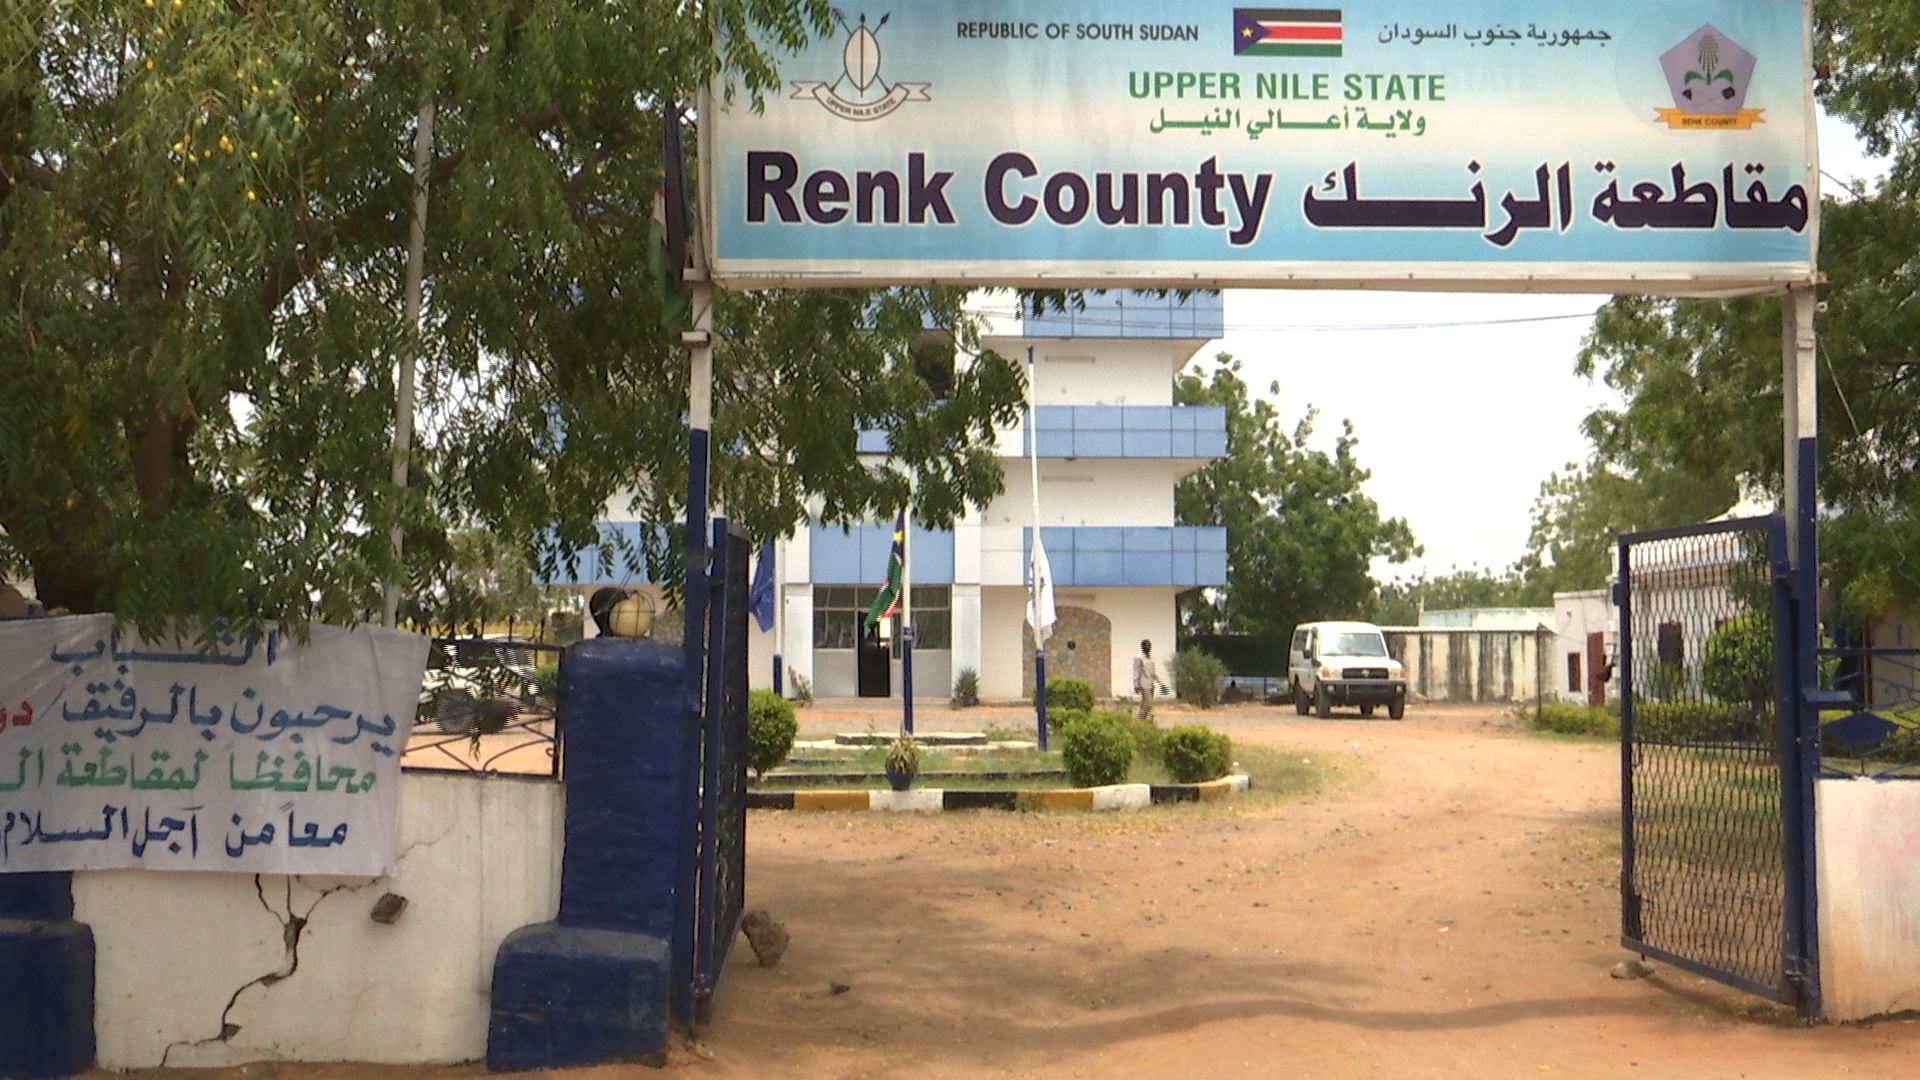 Renk hospital parks ambulances due to fuel shortage